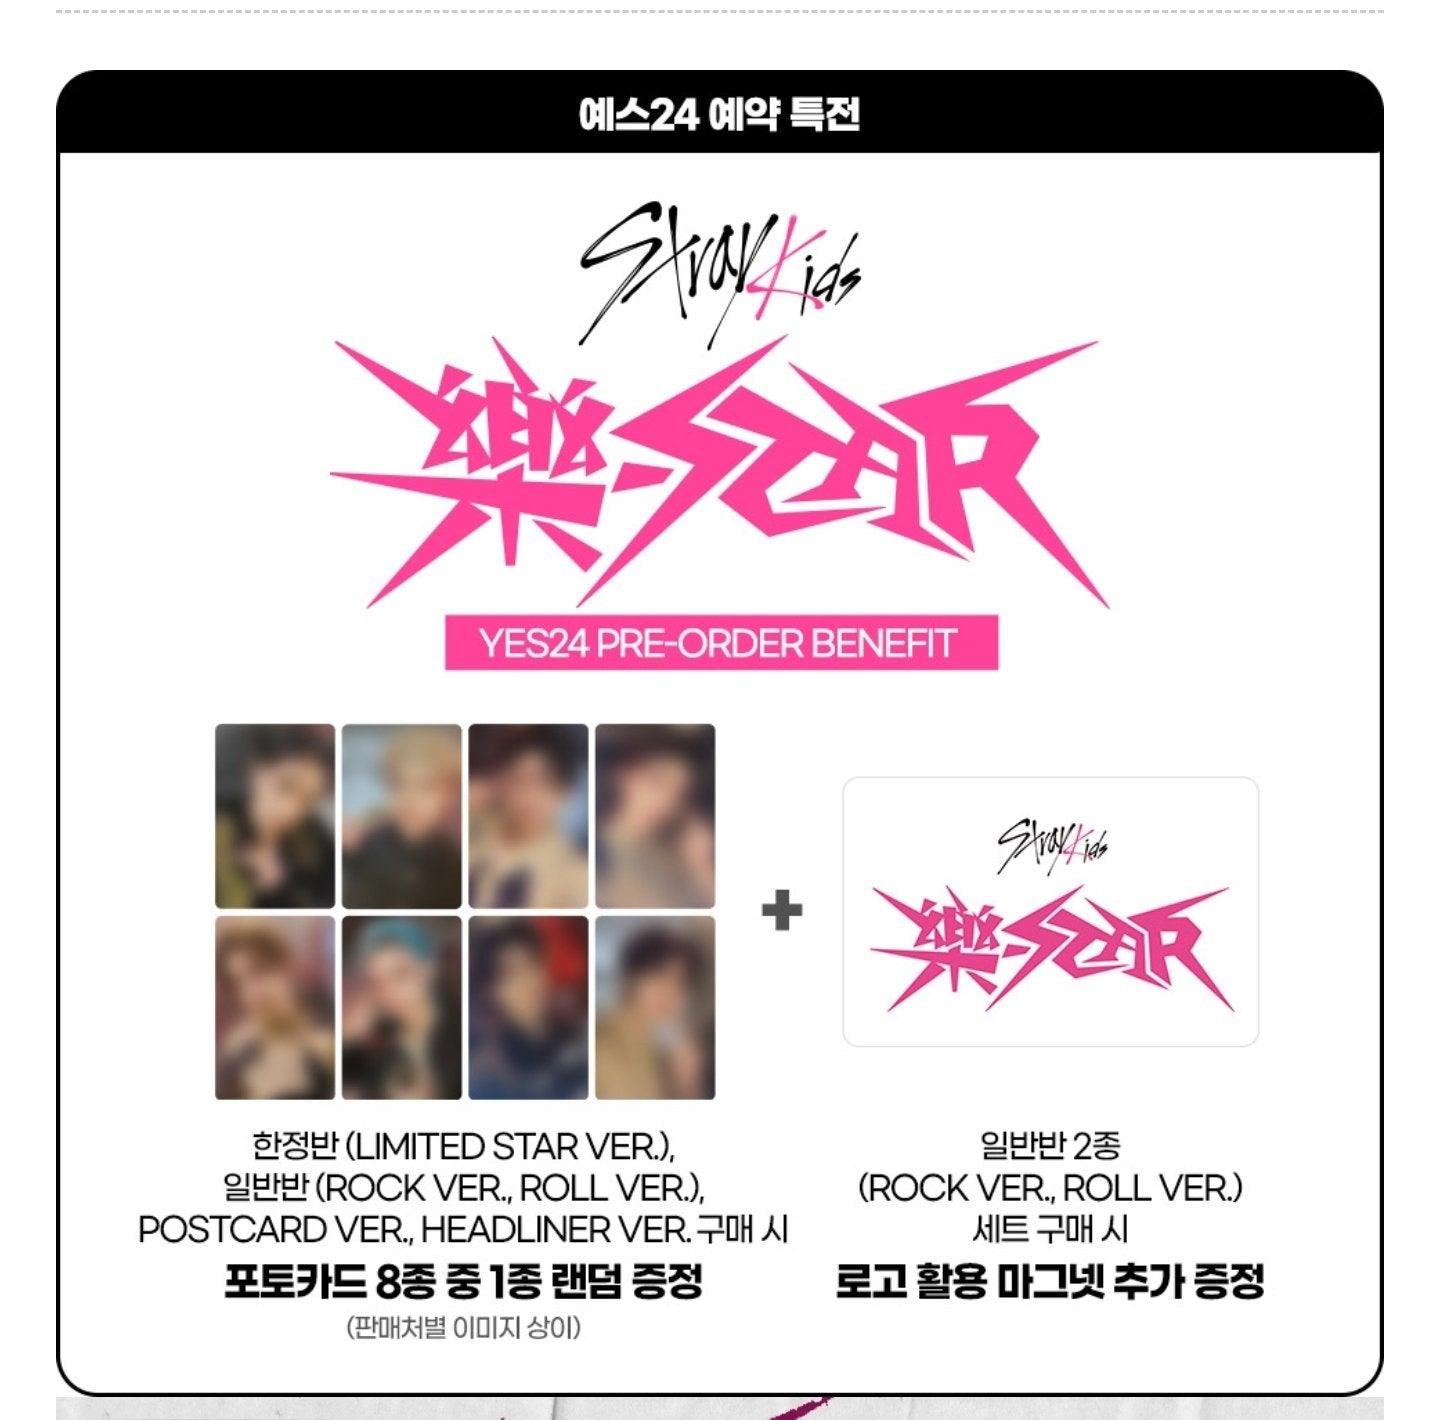 Stray Kids [樂-STAR](ROCKSTAR) (Postcard Ver.) + YES24 benefit - KKANG